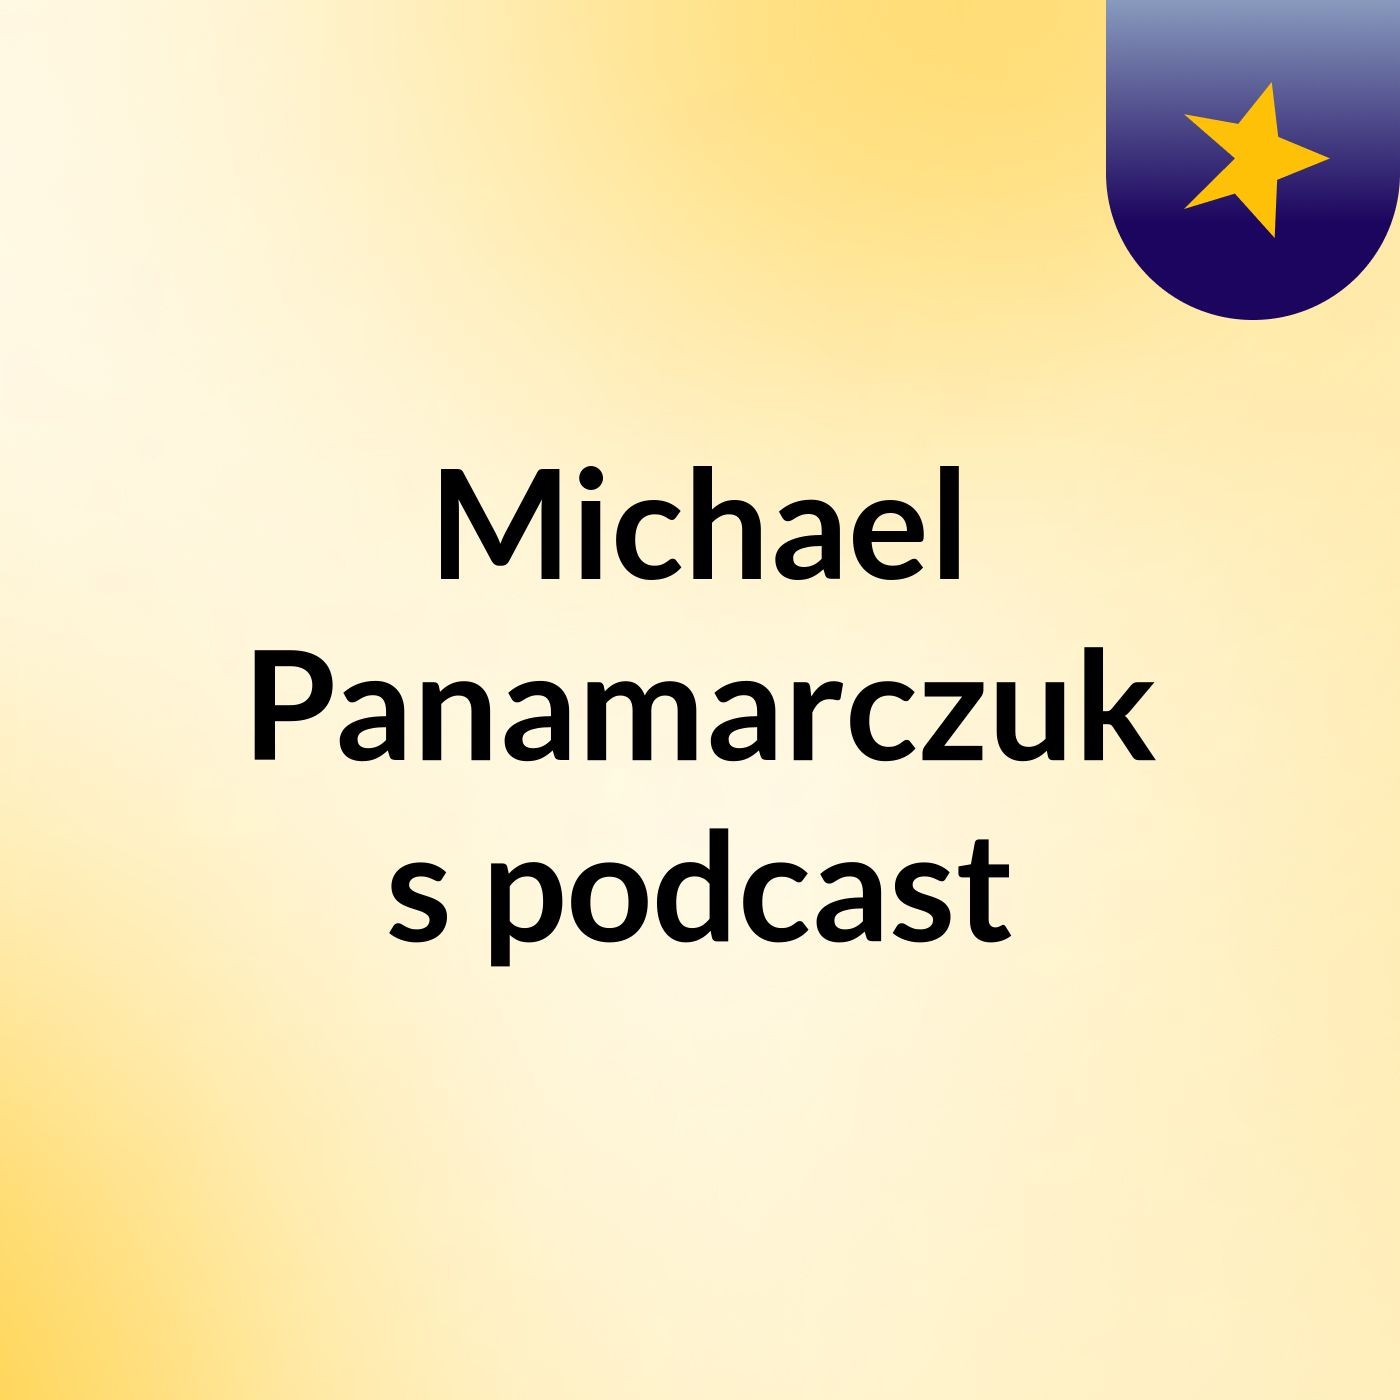 Episode 10 - Michael Panamarczuk's podcast